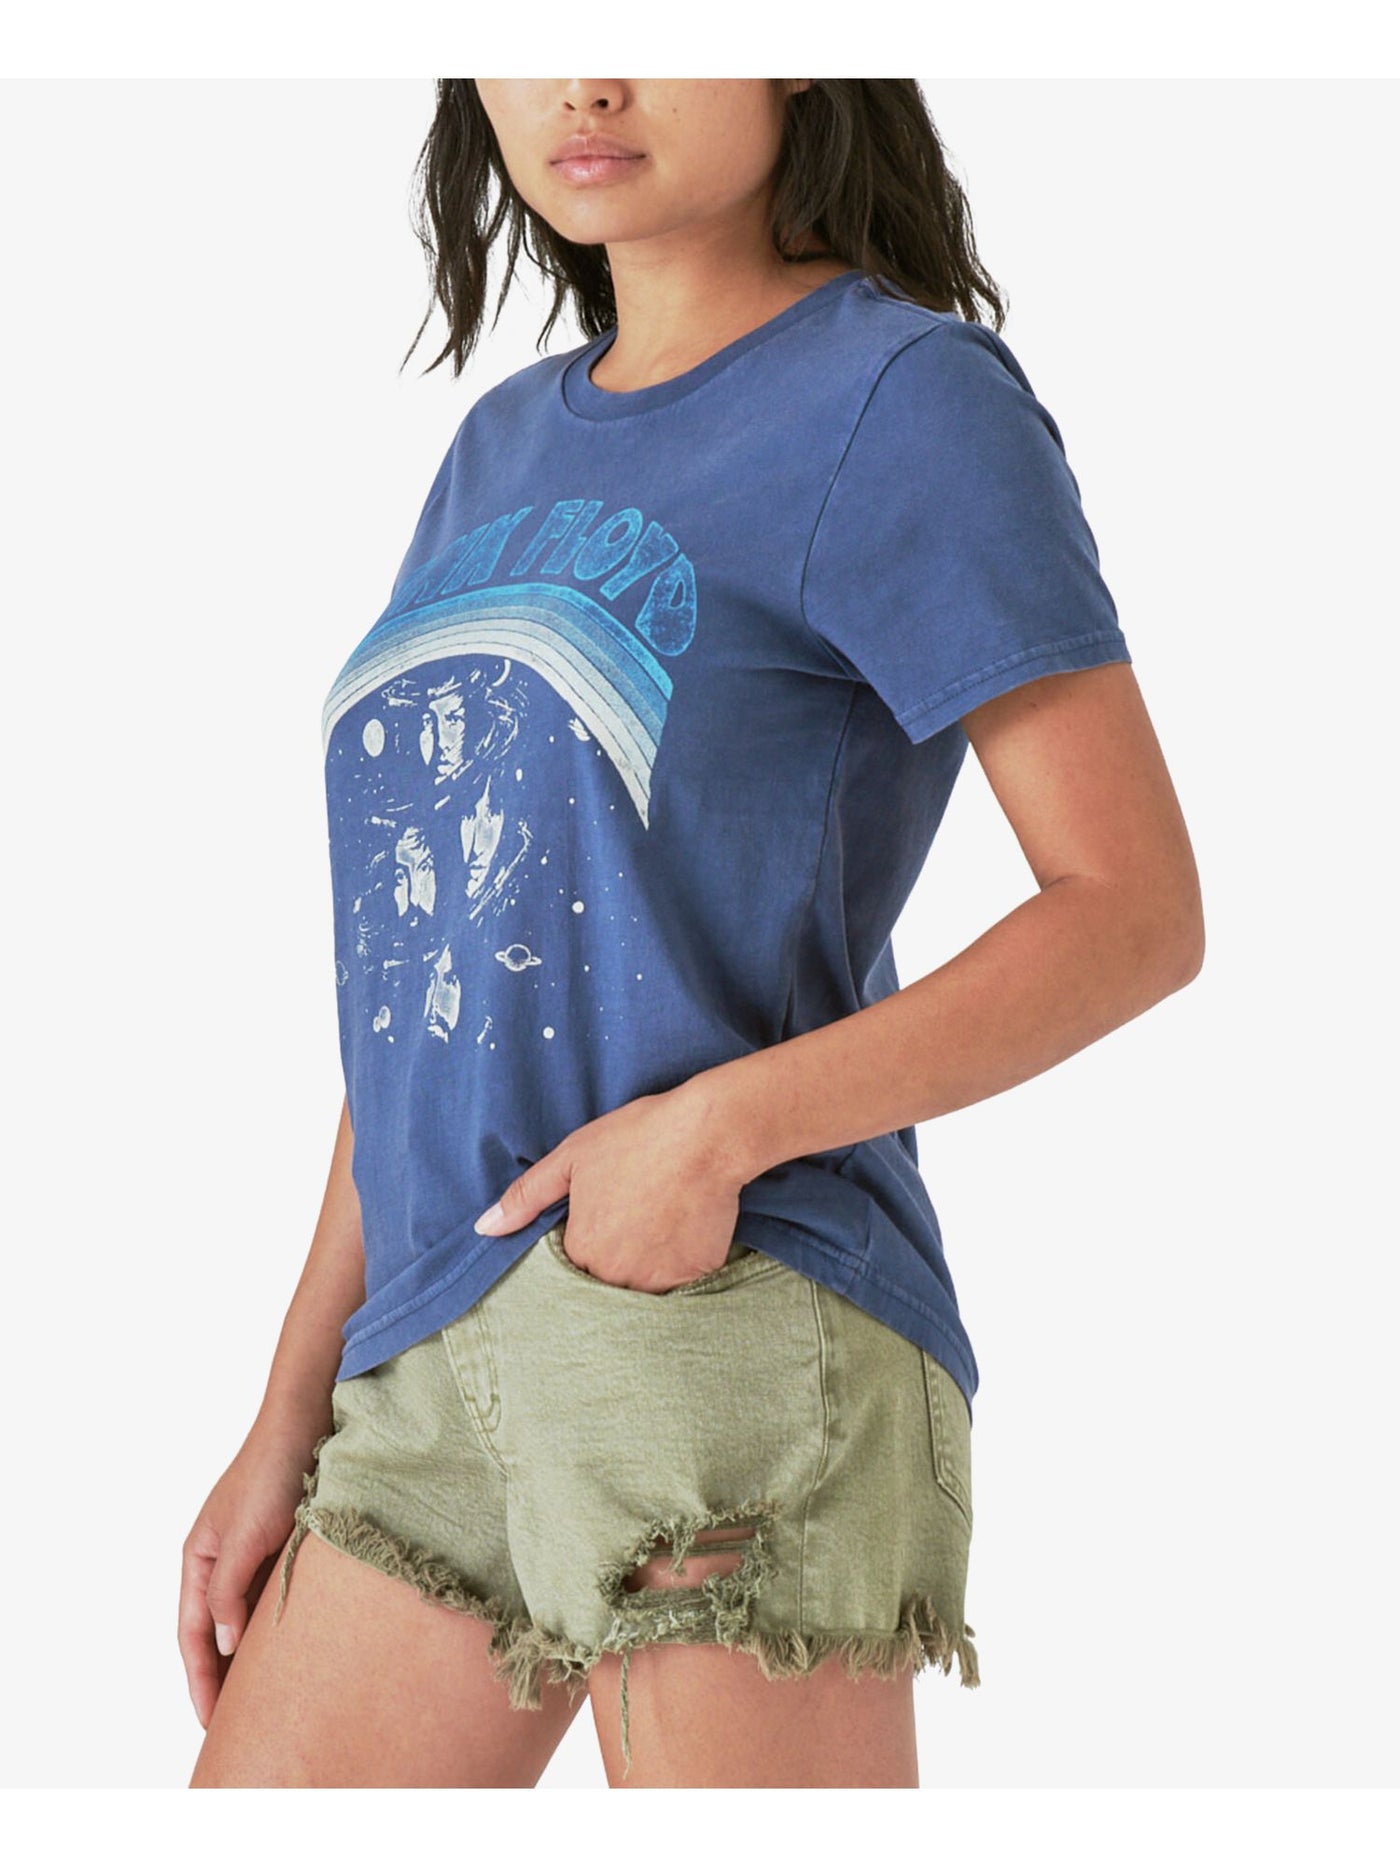 LUCKY BRAND Womens Navy Graphic Short Sleeve Crew Neck T-Shirt M